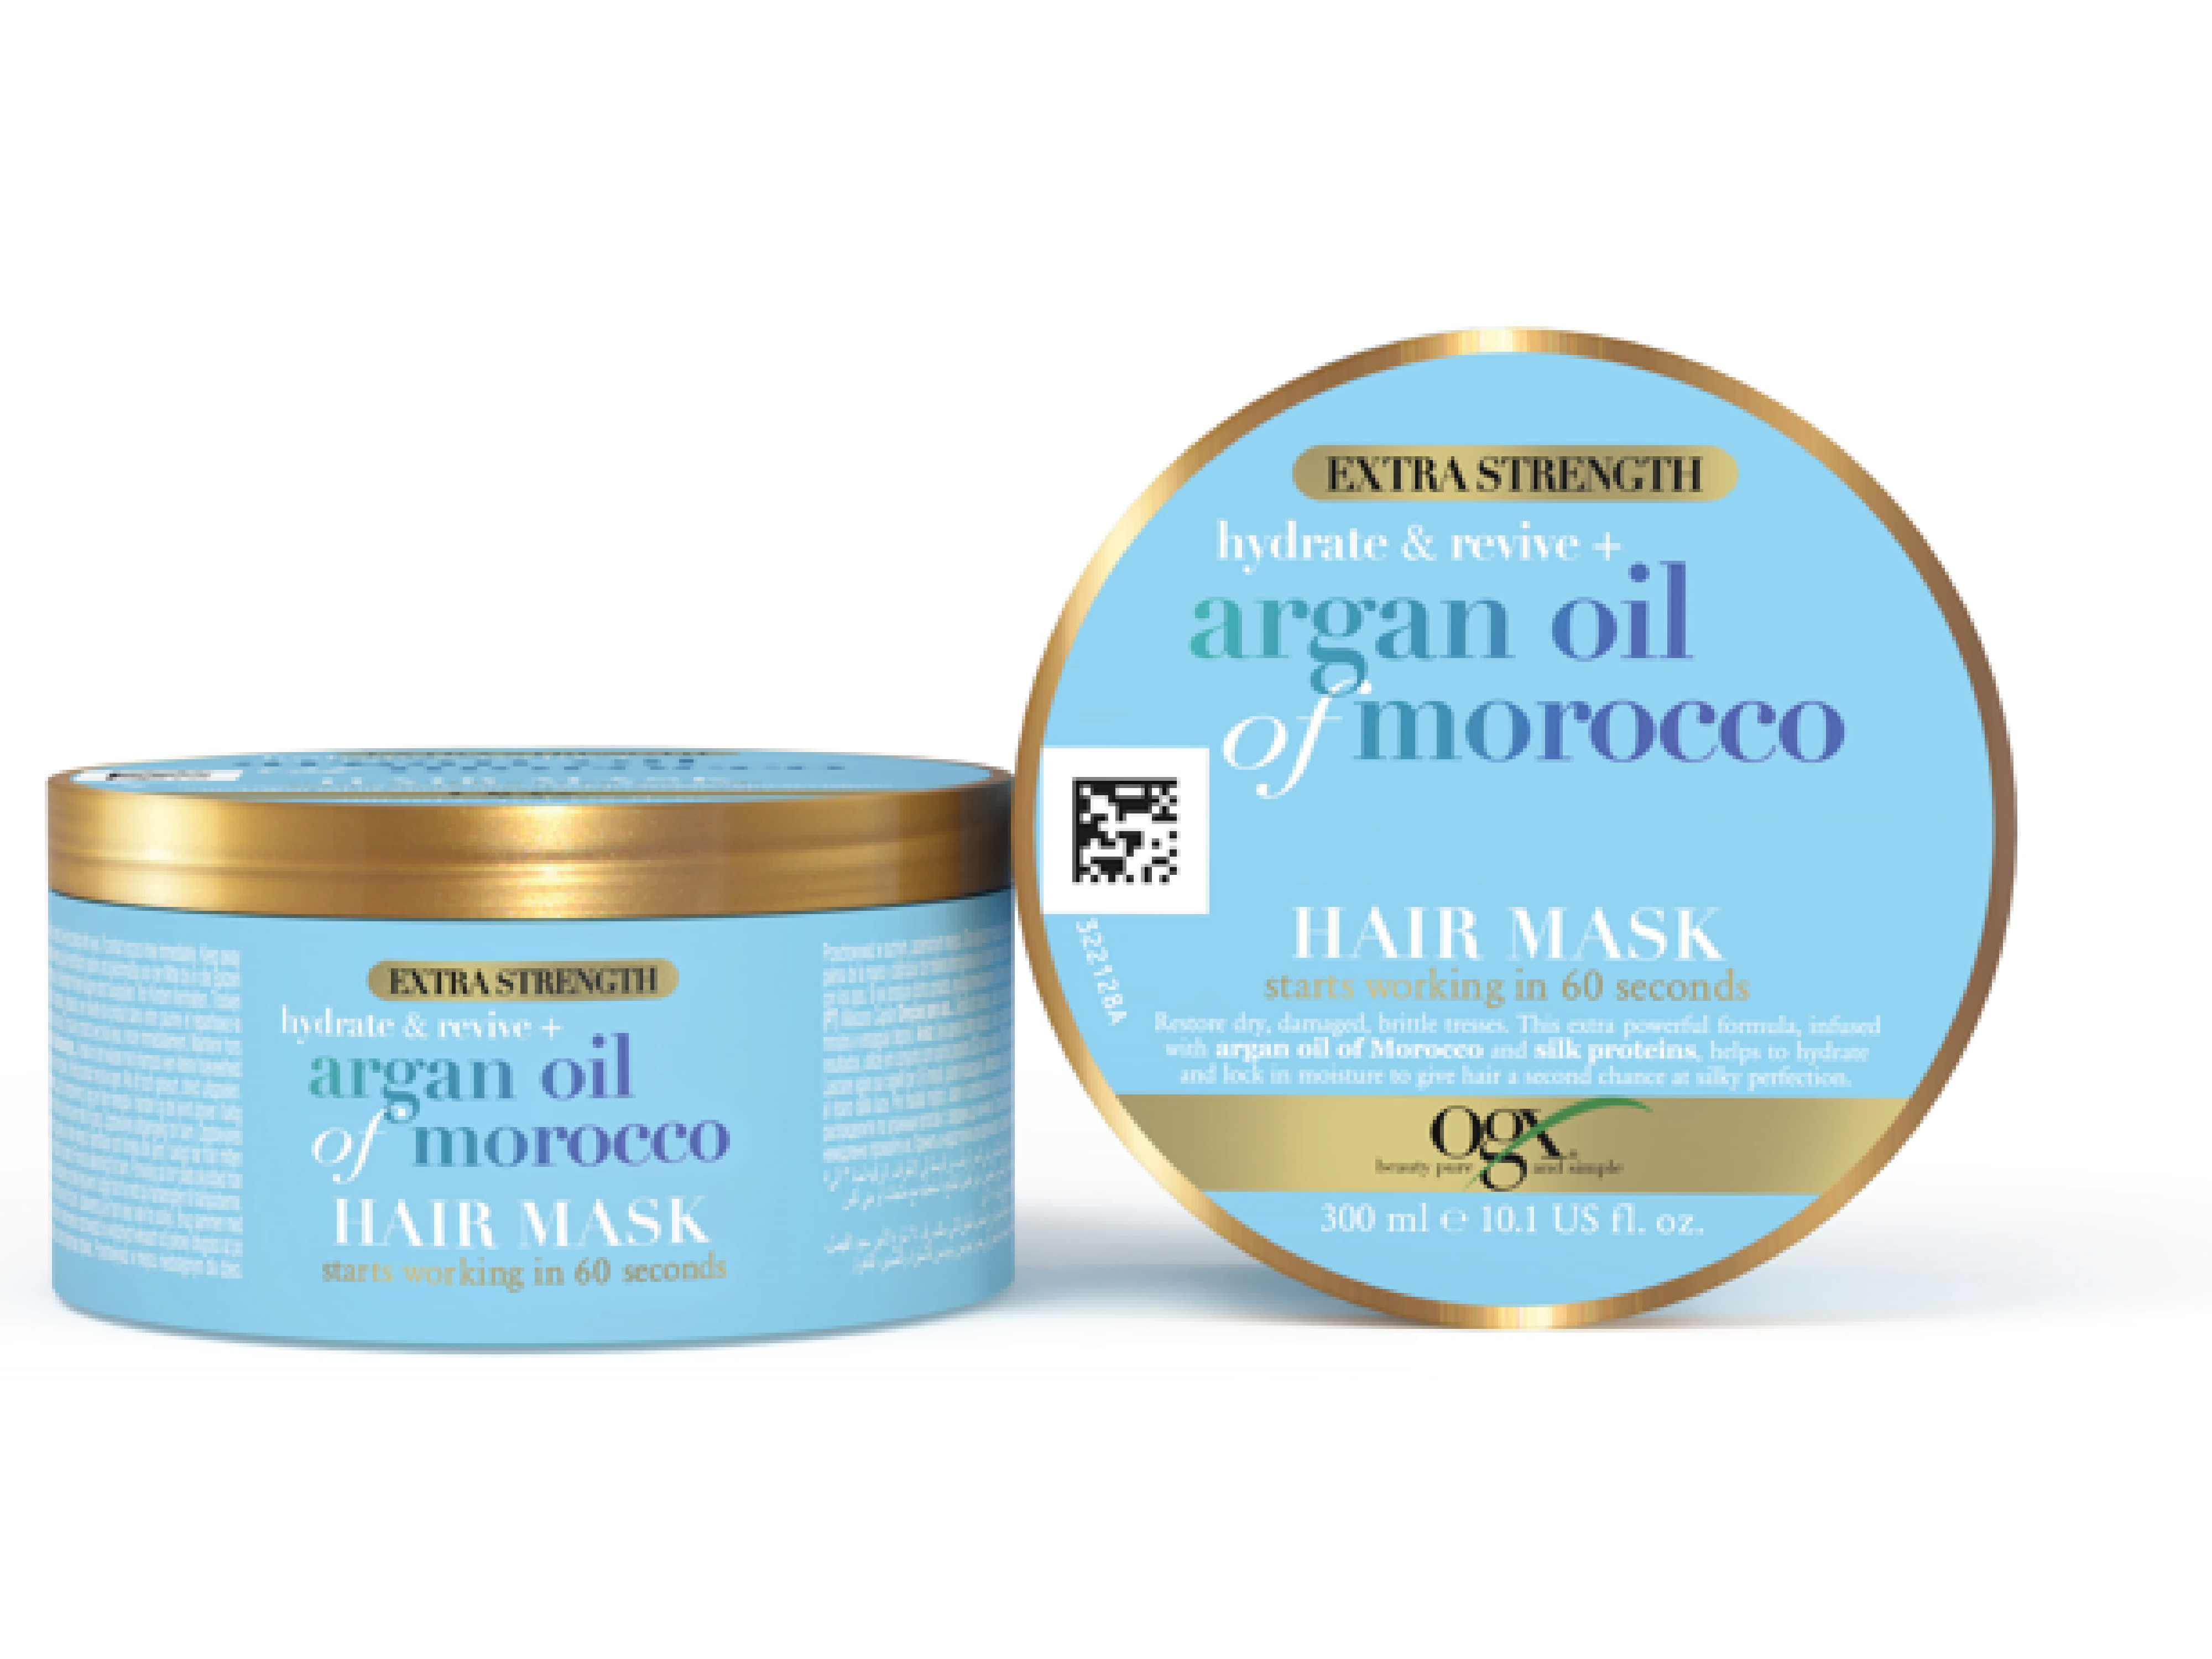 Ogx Moroccan Argan Oil Hair Mask, 300 ml